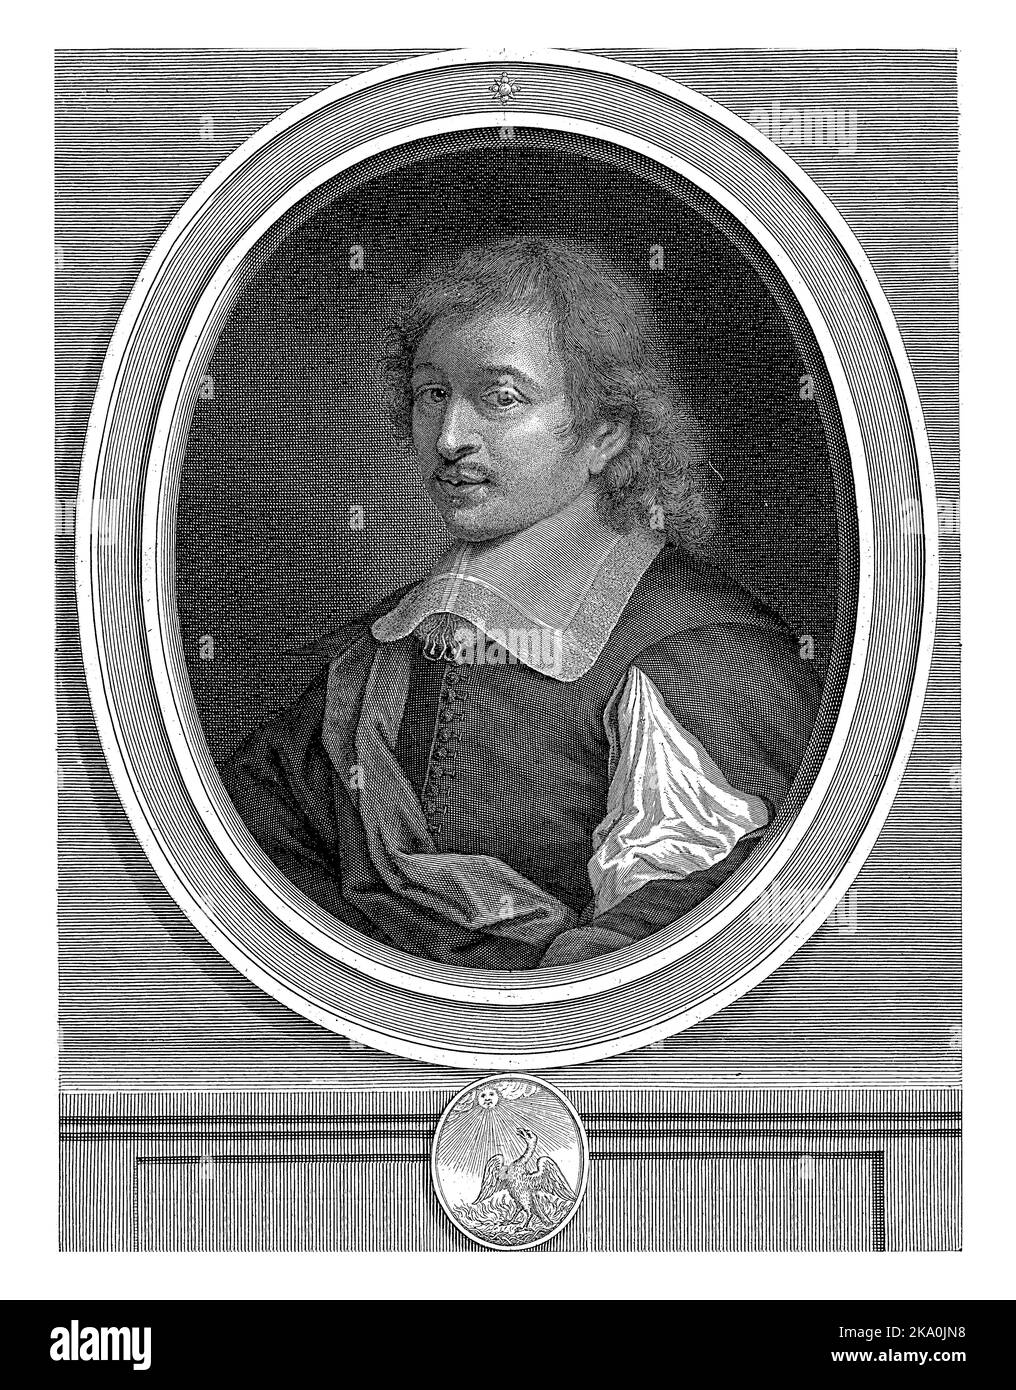 Porträt des Malers Eustache Lesueur, nach seinem Selbstporträt Pieter van Schuppen, nach Eustache Lesueur, 1696 Stockfoto